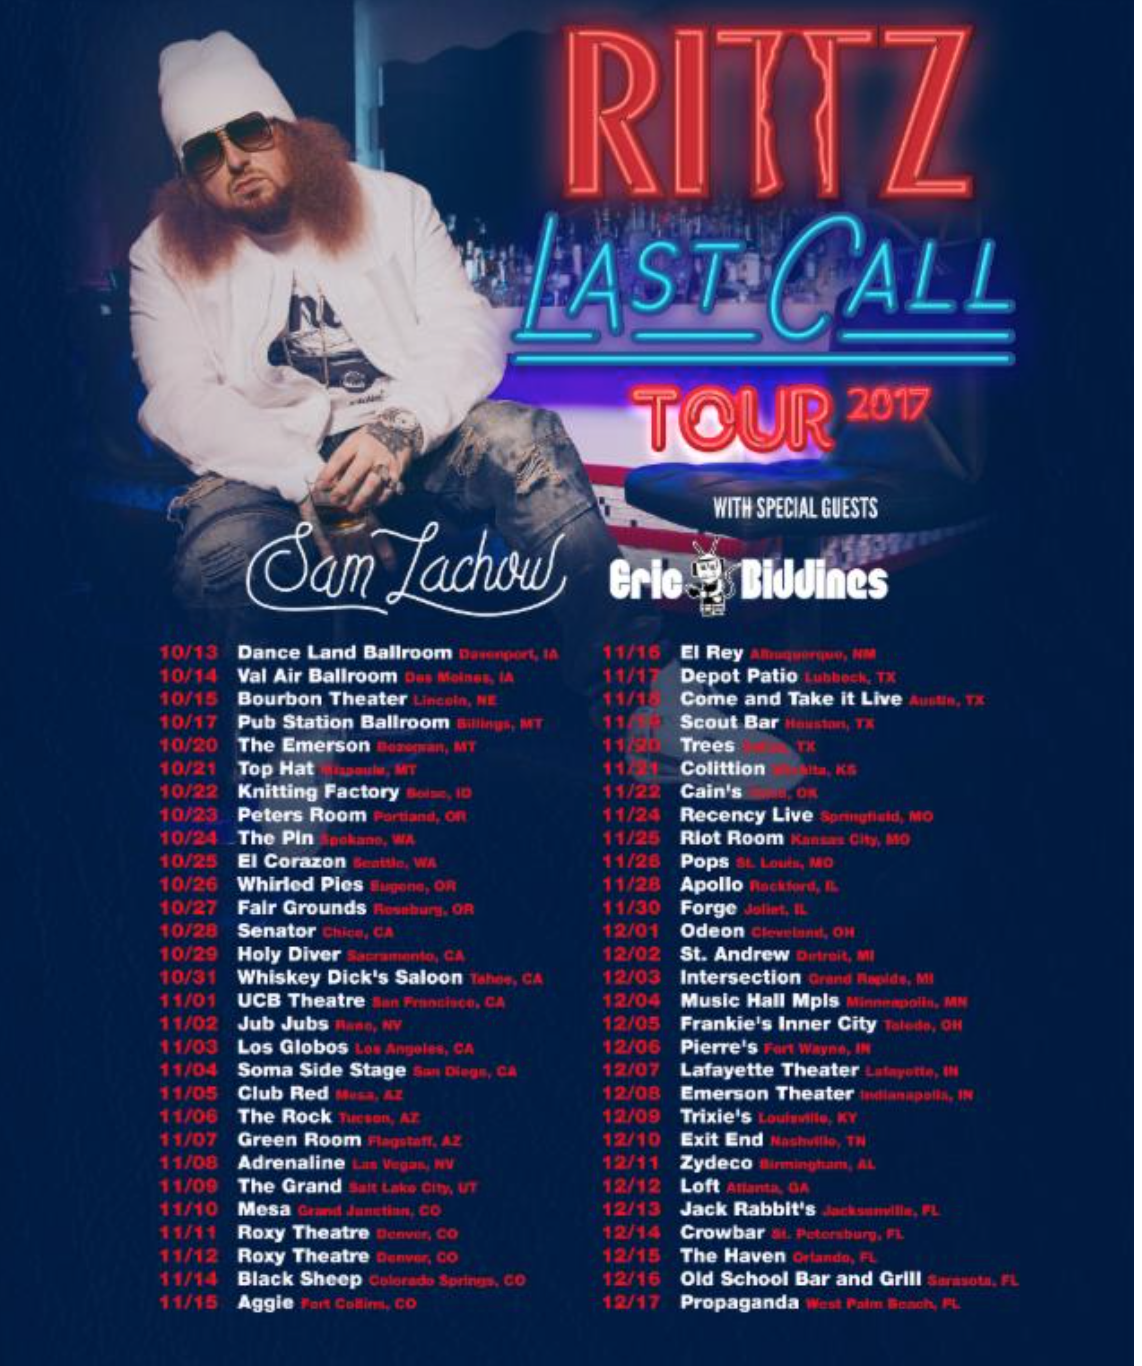 rittz album sales top of the line